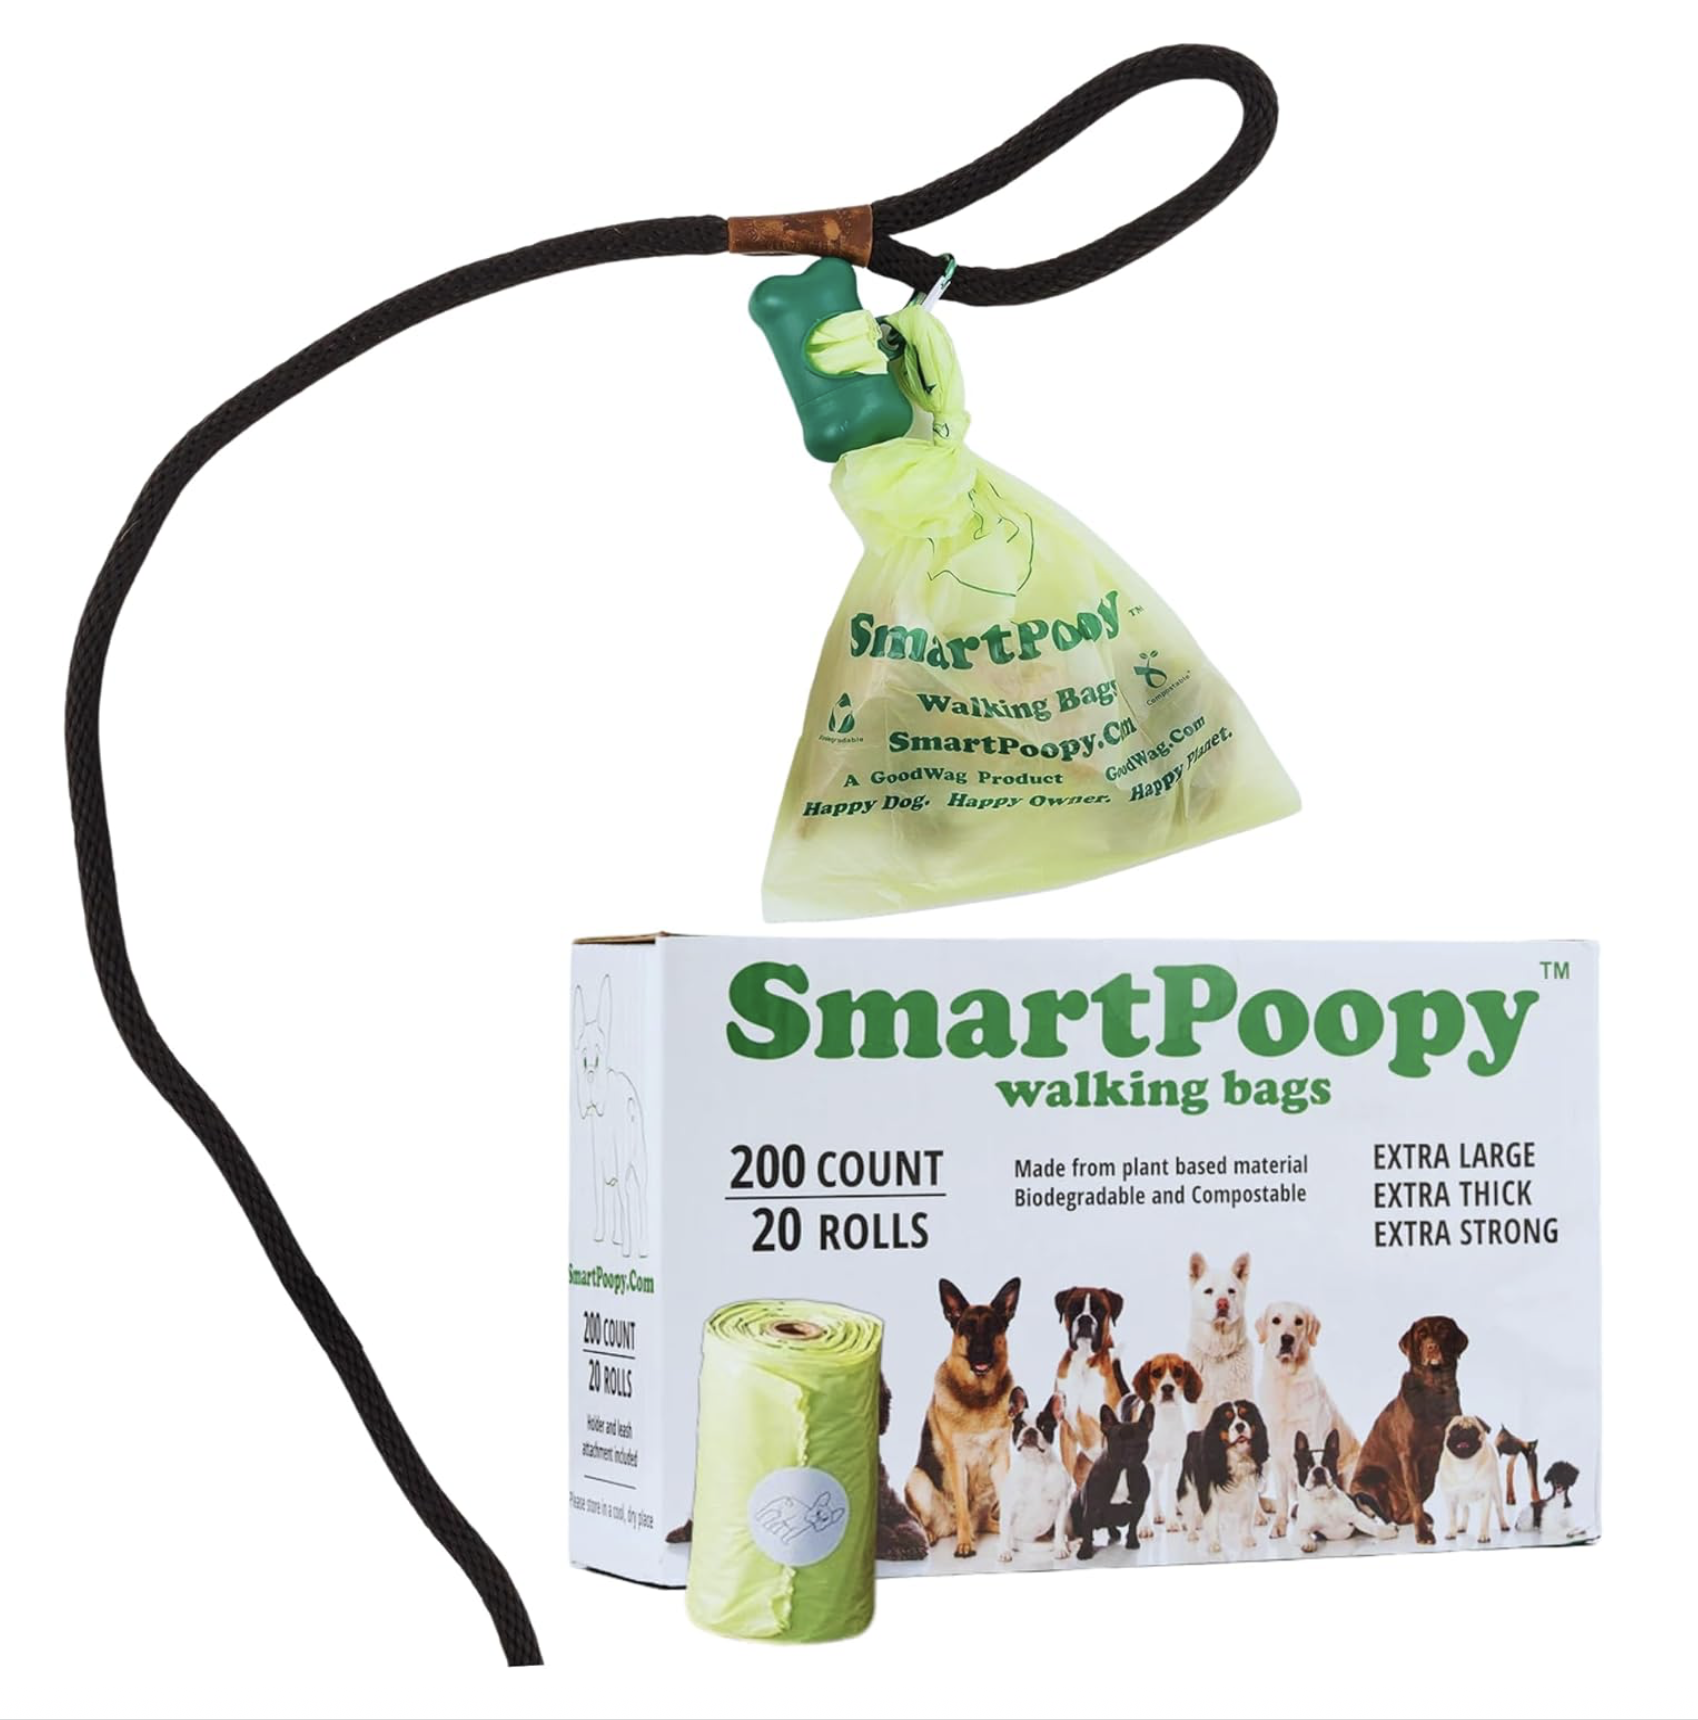 SmartPoopy walking bags 200 count - 20 rolls